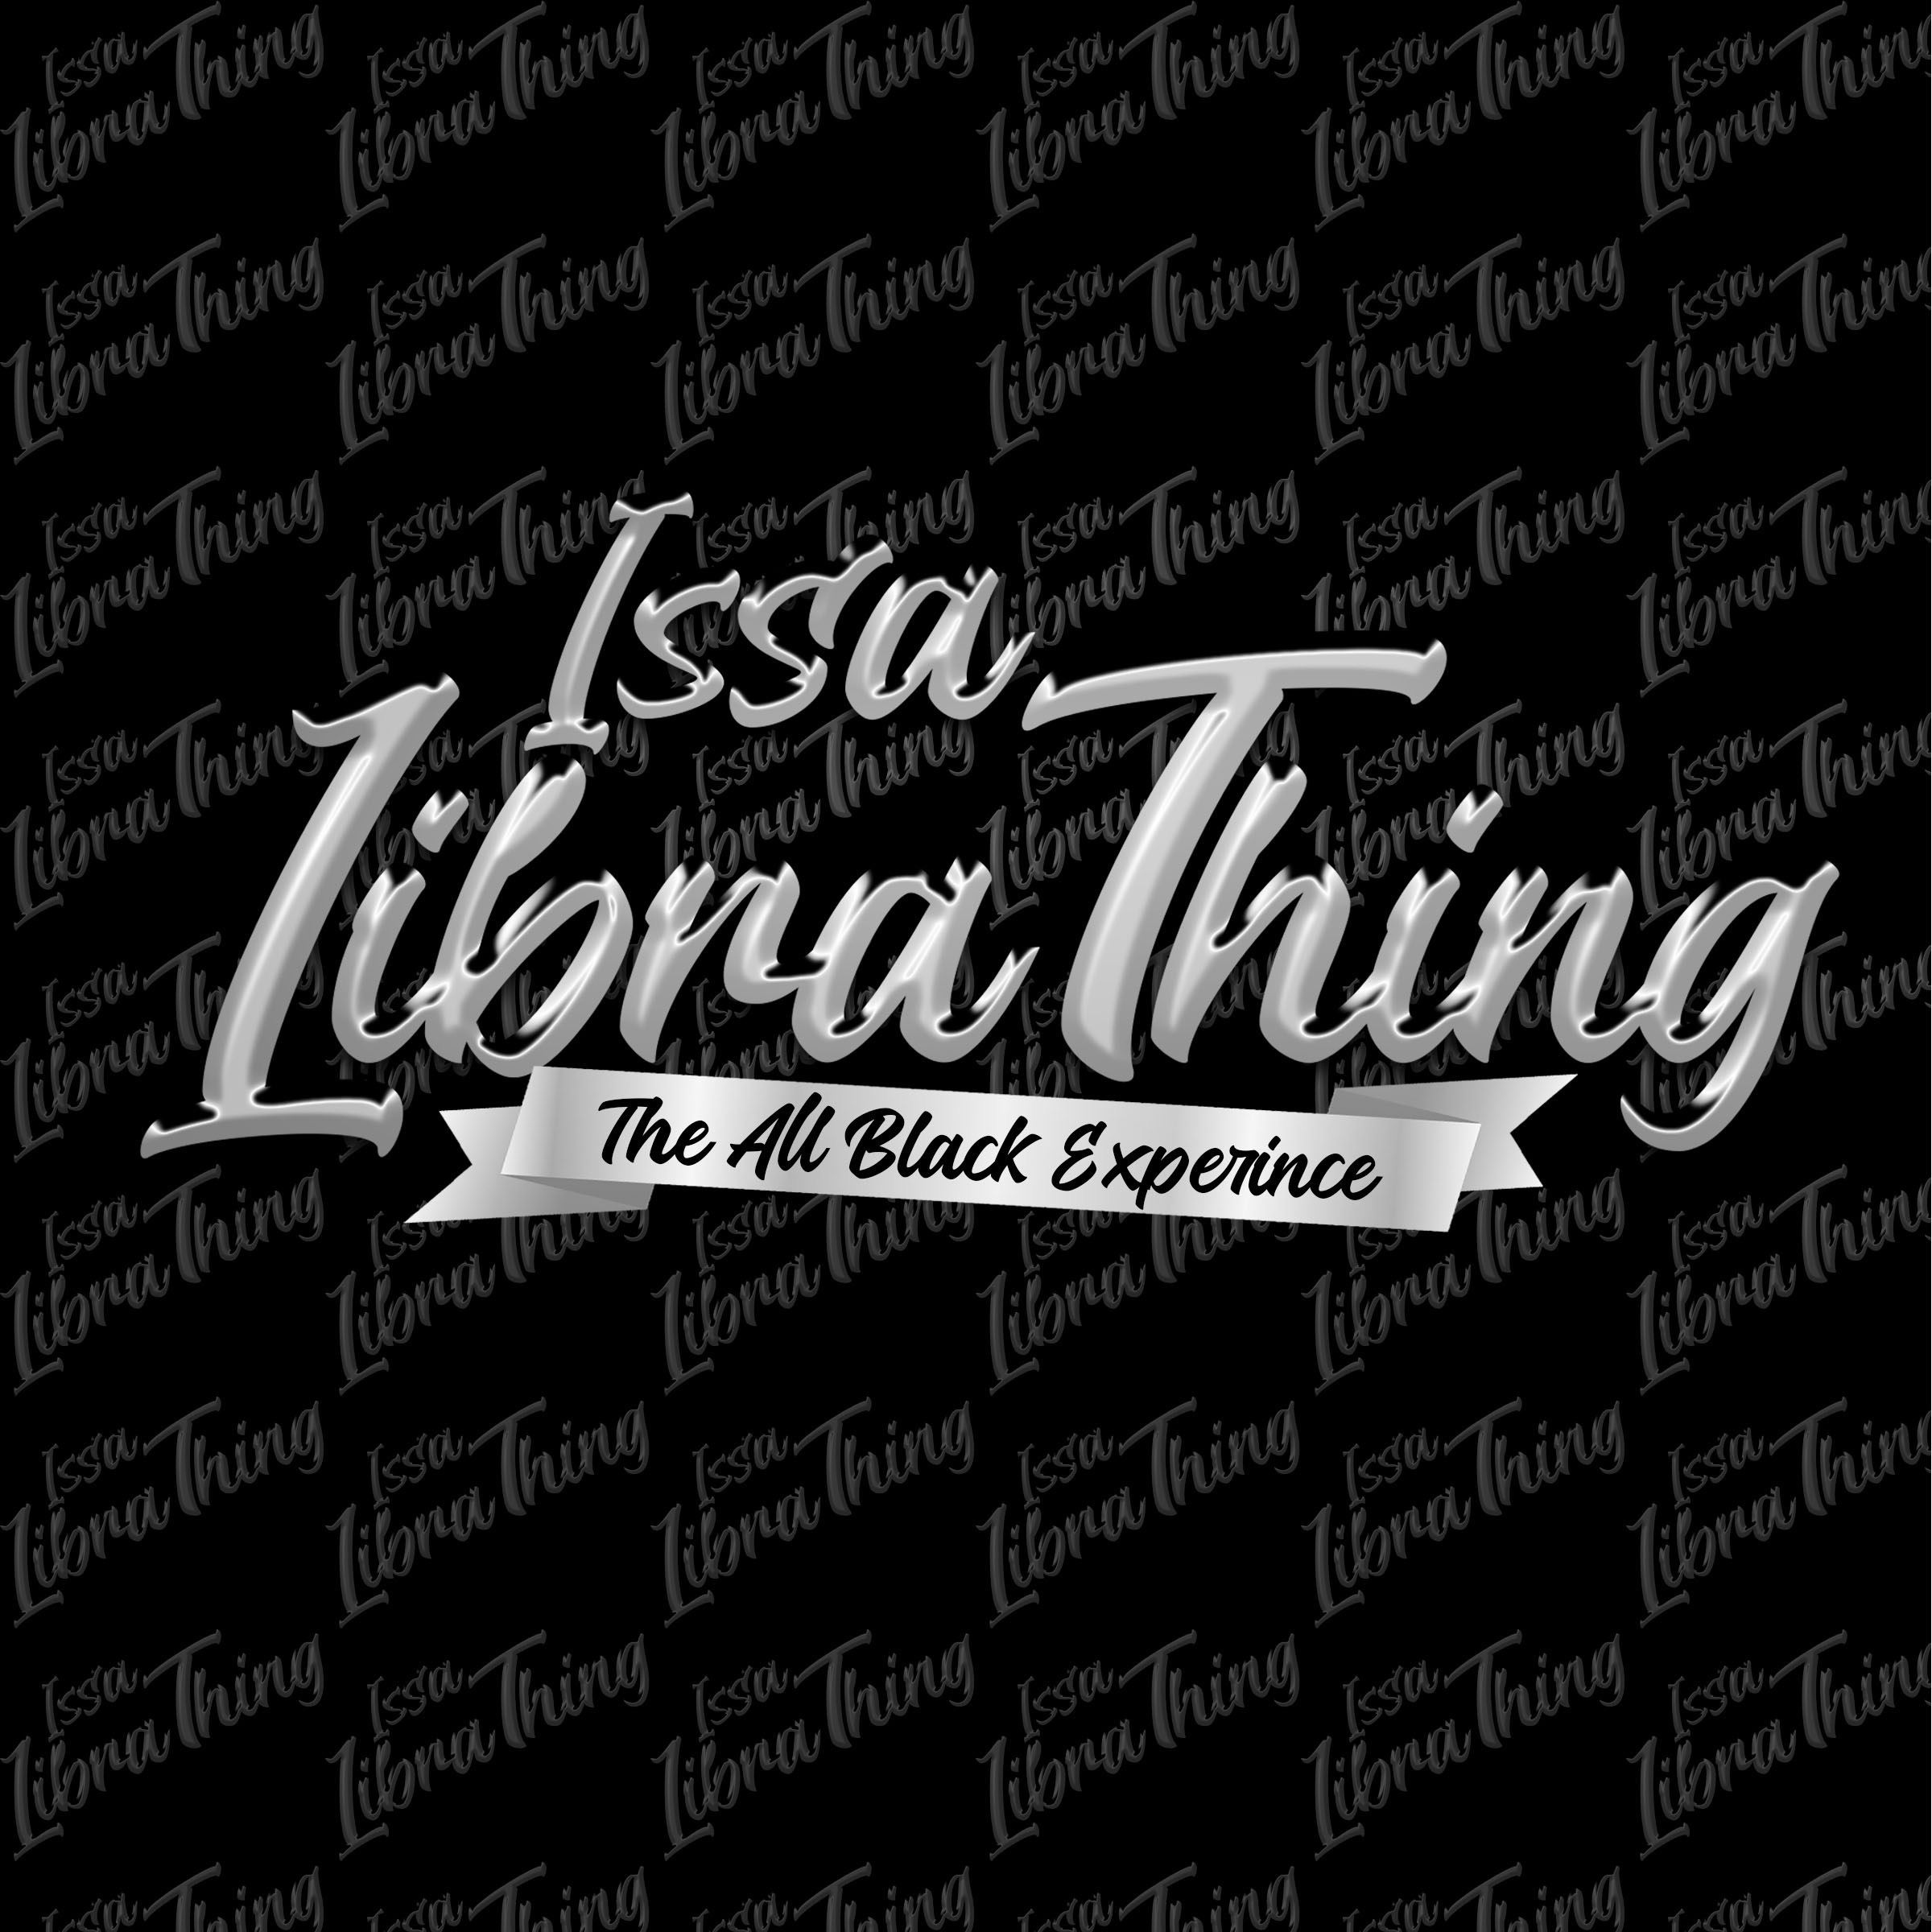 ISSA LIBRA THING 22